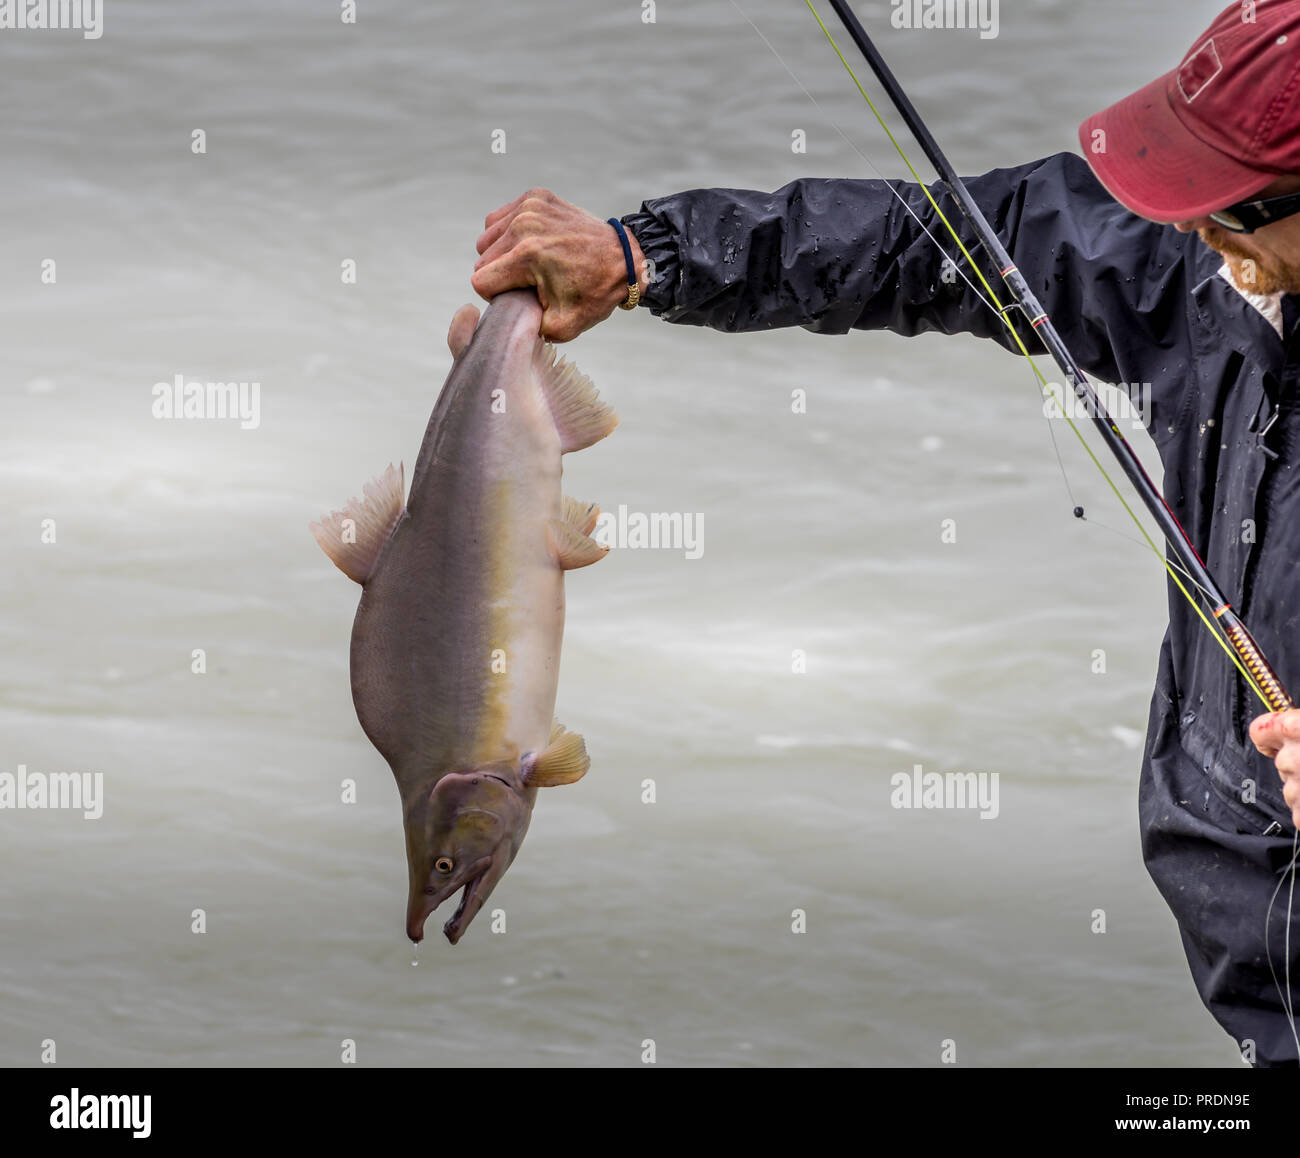 Talkeetna Alaska, USA - Aug 12, 2018. Fishman caught a pink salmon in Alaska's Talkeetna River Stock Photo